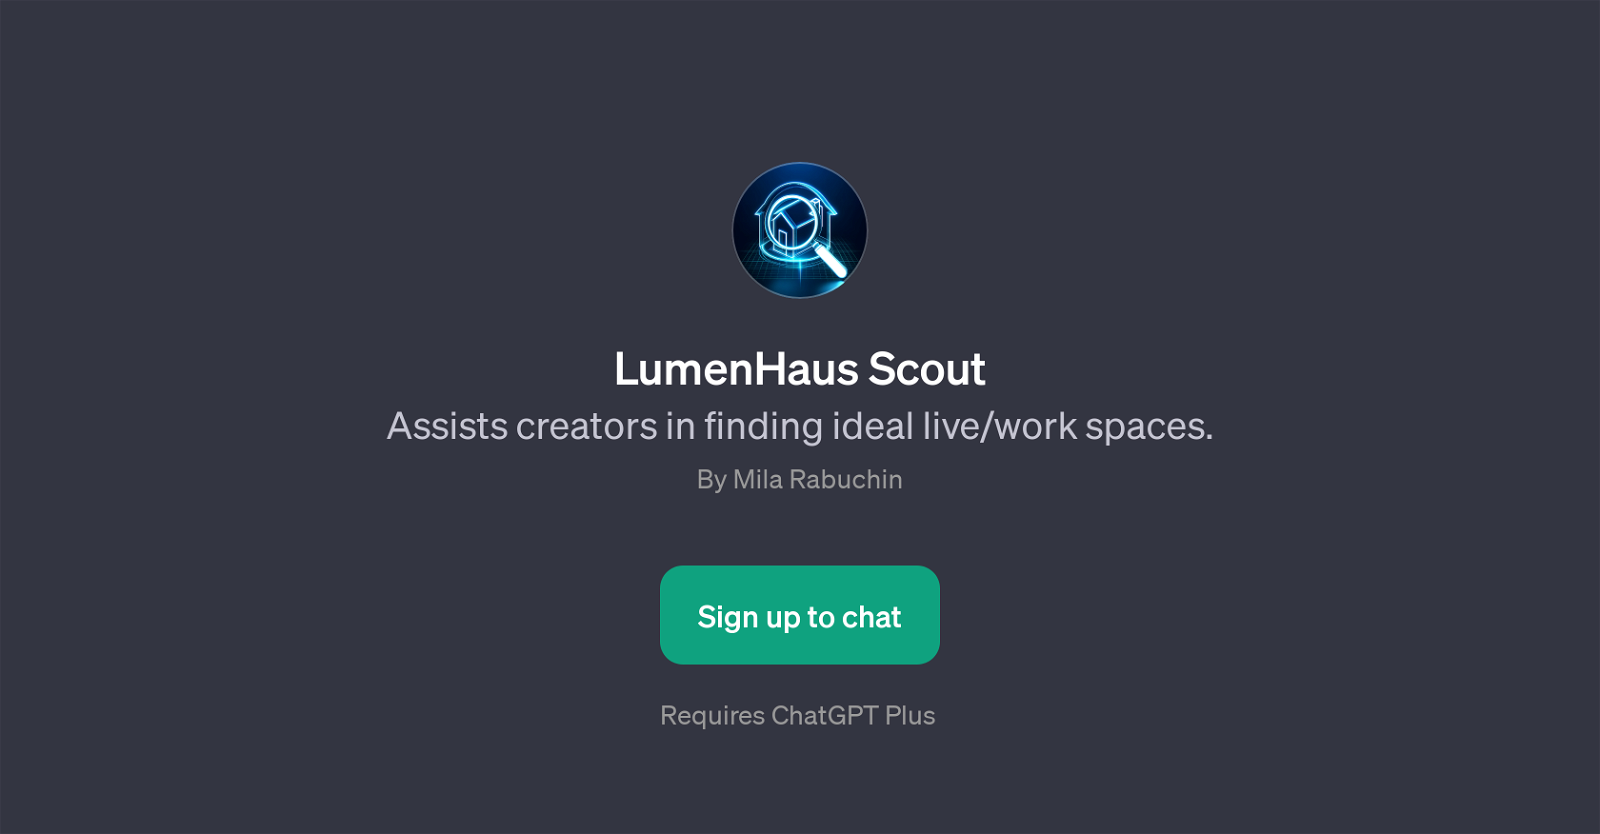 LumenHaus Scout website